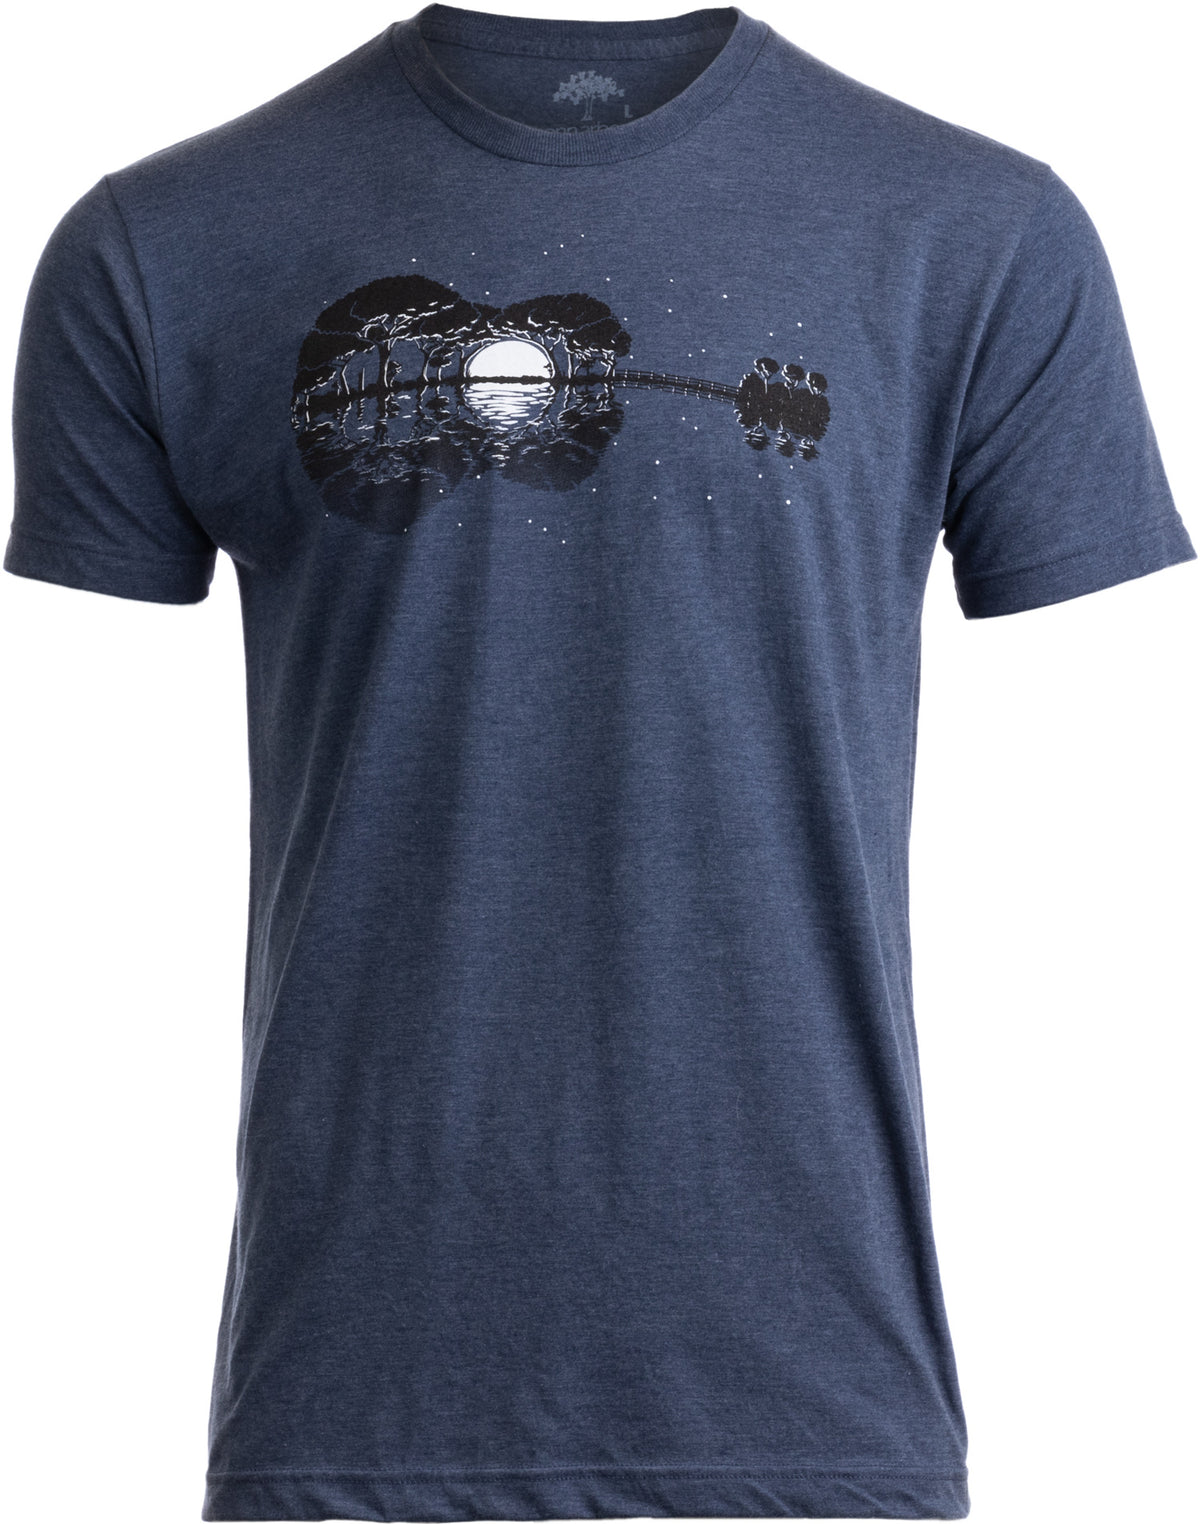 Acoustic Guitar Moonrise - Guitarist Musician Music Player T-shirt - Men's/Unisex